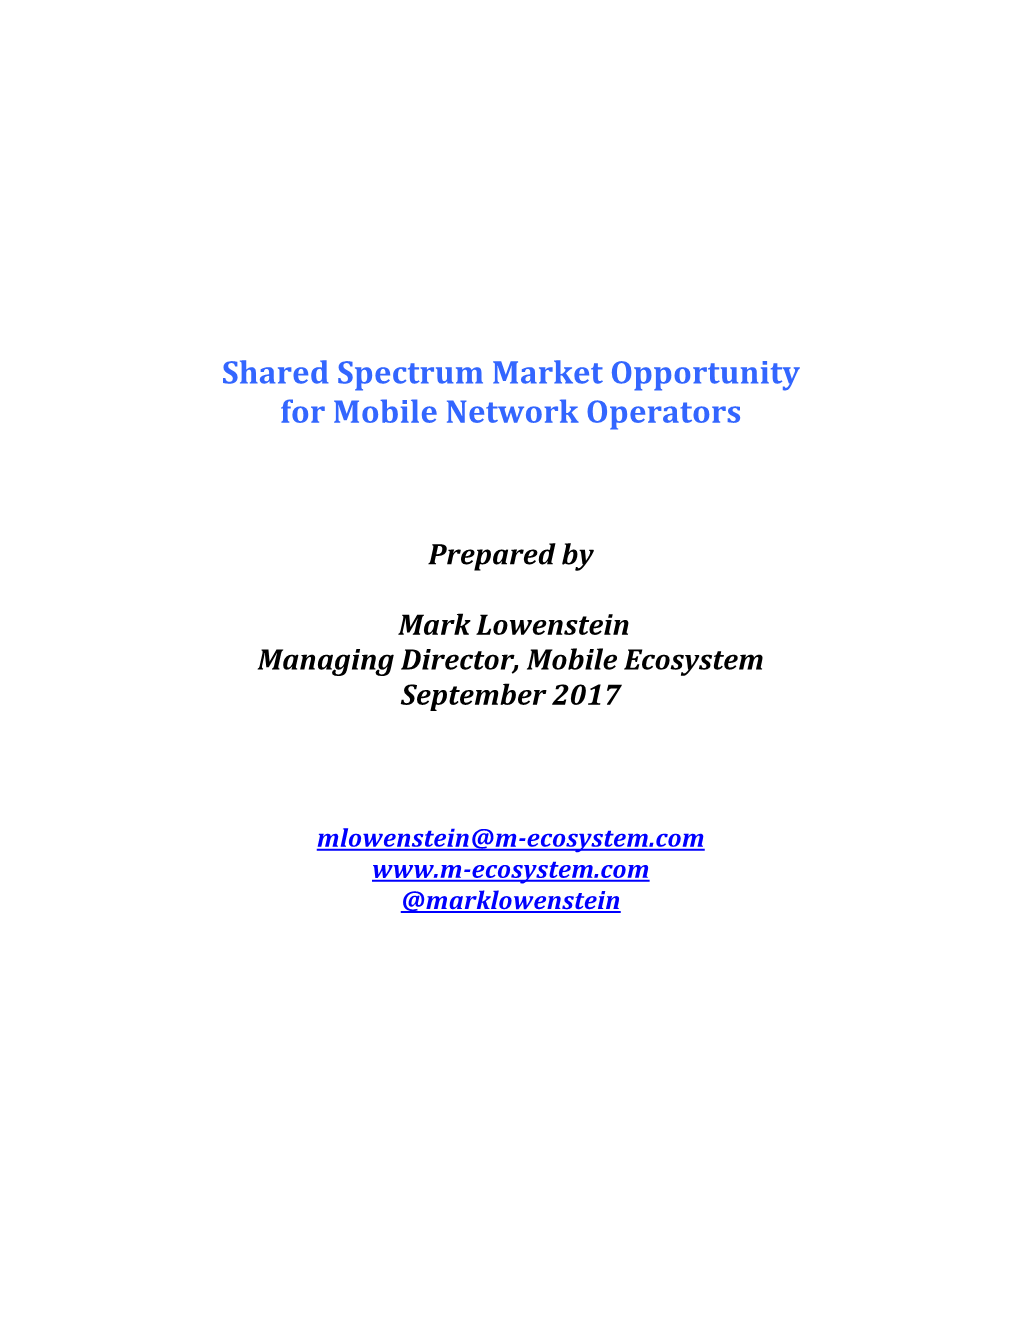 Shared Spectrum Market Opportunity for Mobile Network Operators